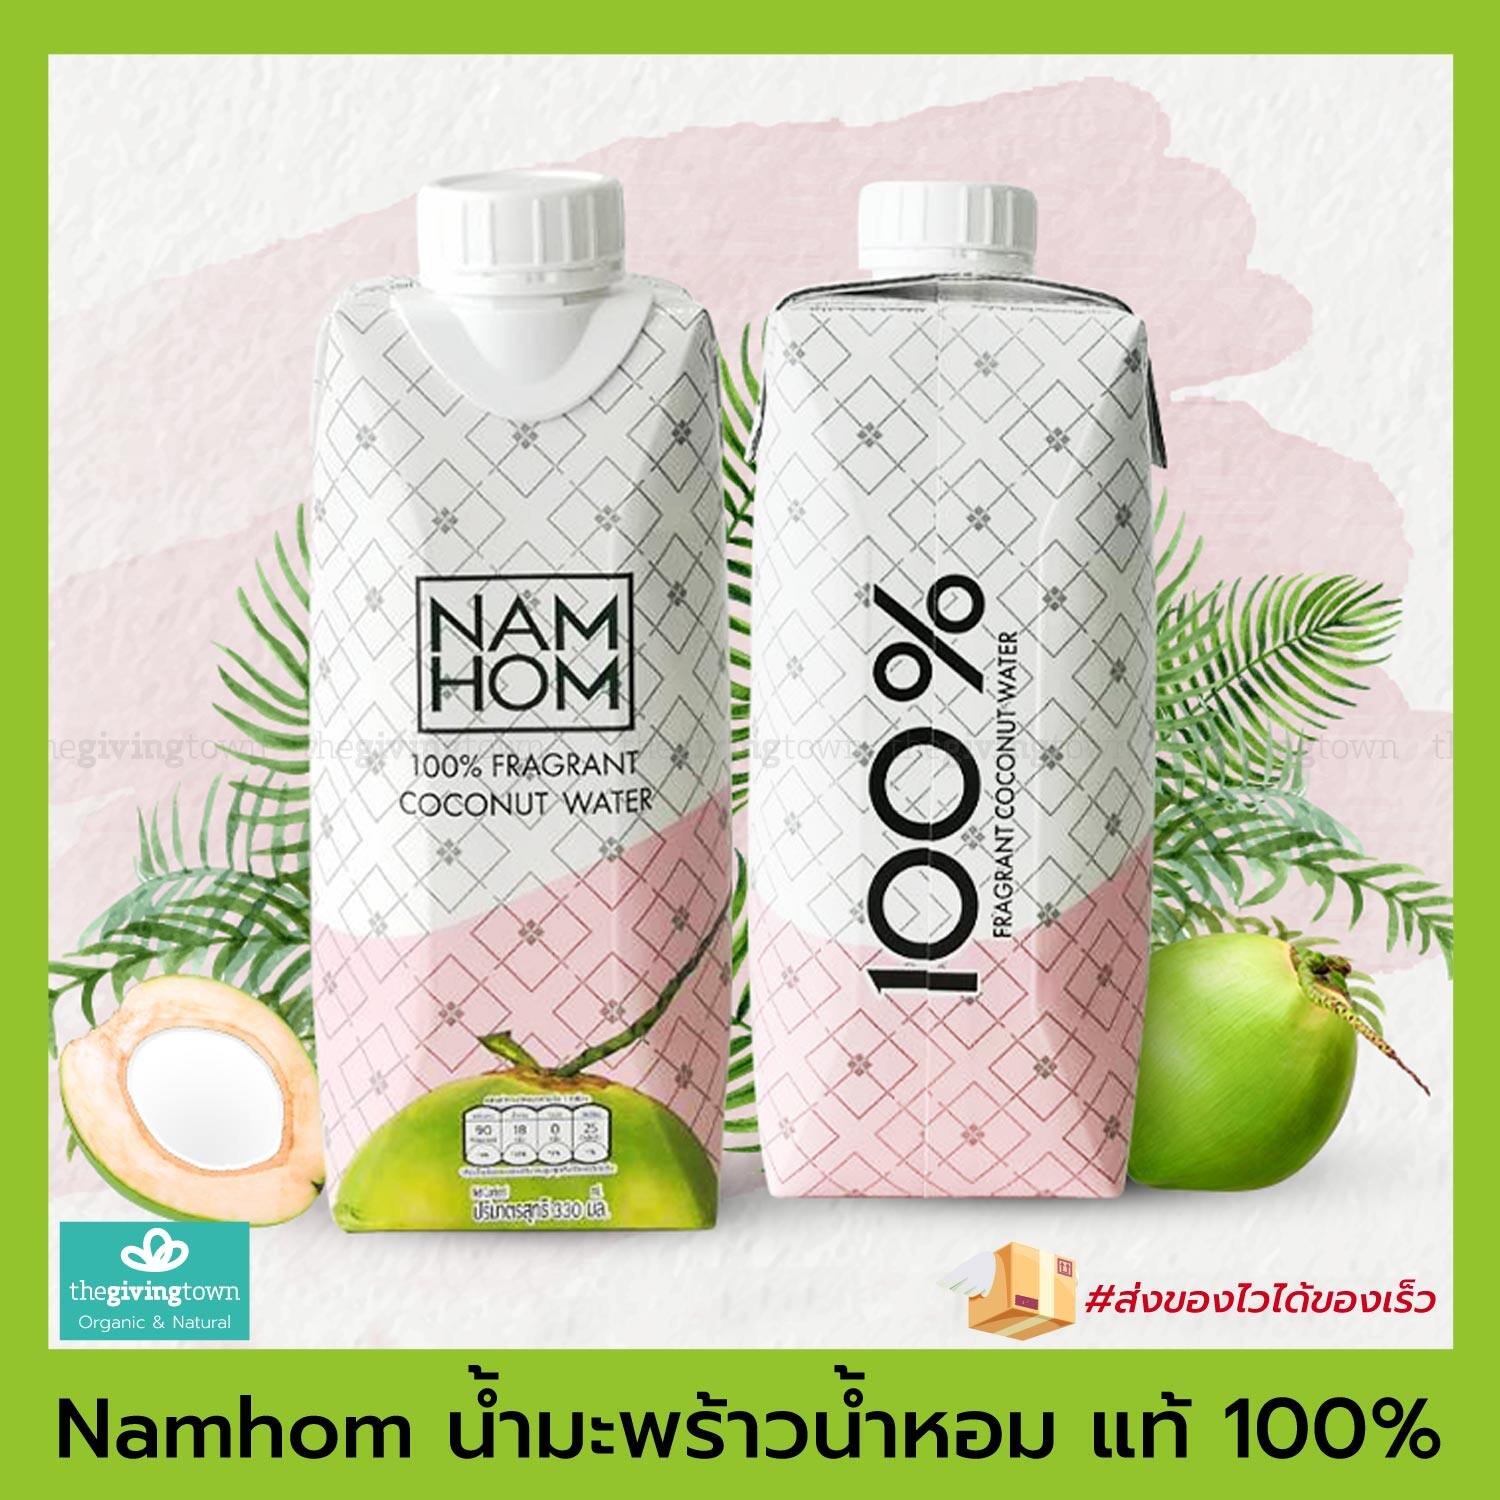 Namhom น้ำมะพร้าวน้ำหอม แท้ 100% Coconut Water น้ำมะพร้าว มะพร้าว แท้ 100% coconut juice น้ำมะพร้าว หอม Tako Brand